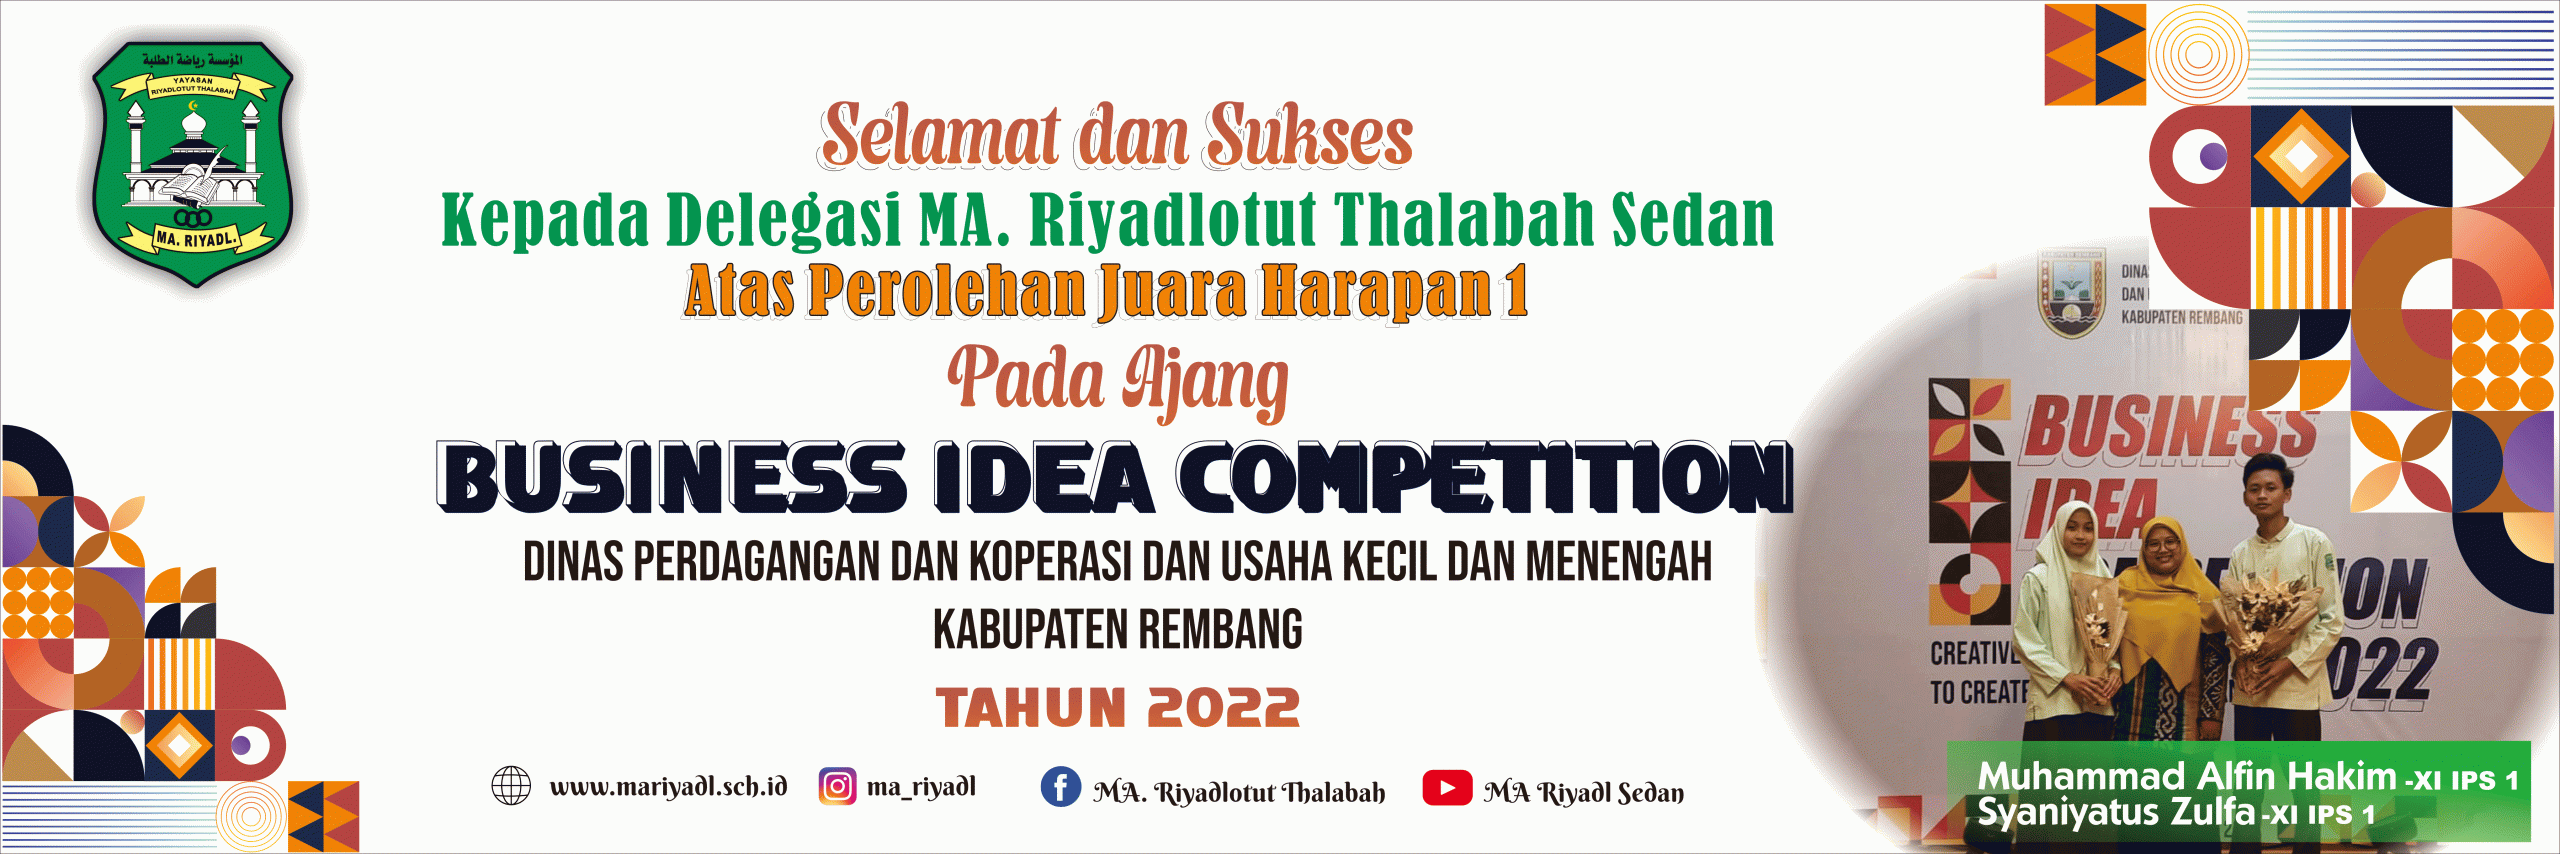 Business Idea Competition 2022 Juara Harapan 1 Kabupaten Rembang